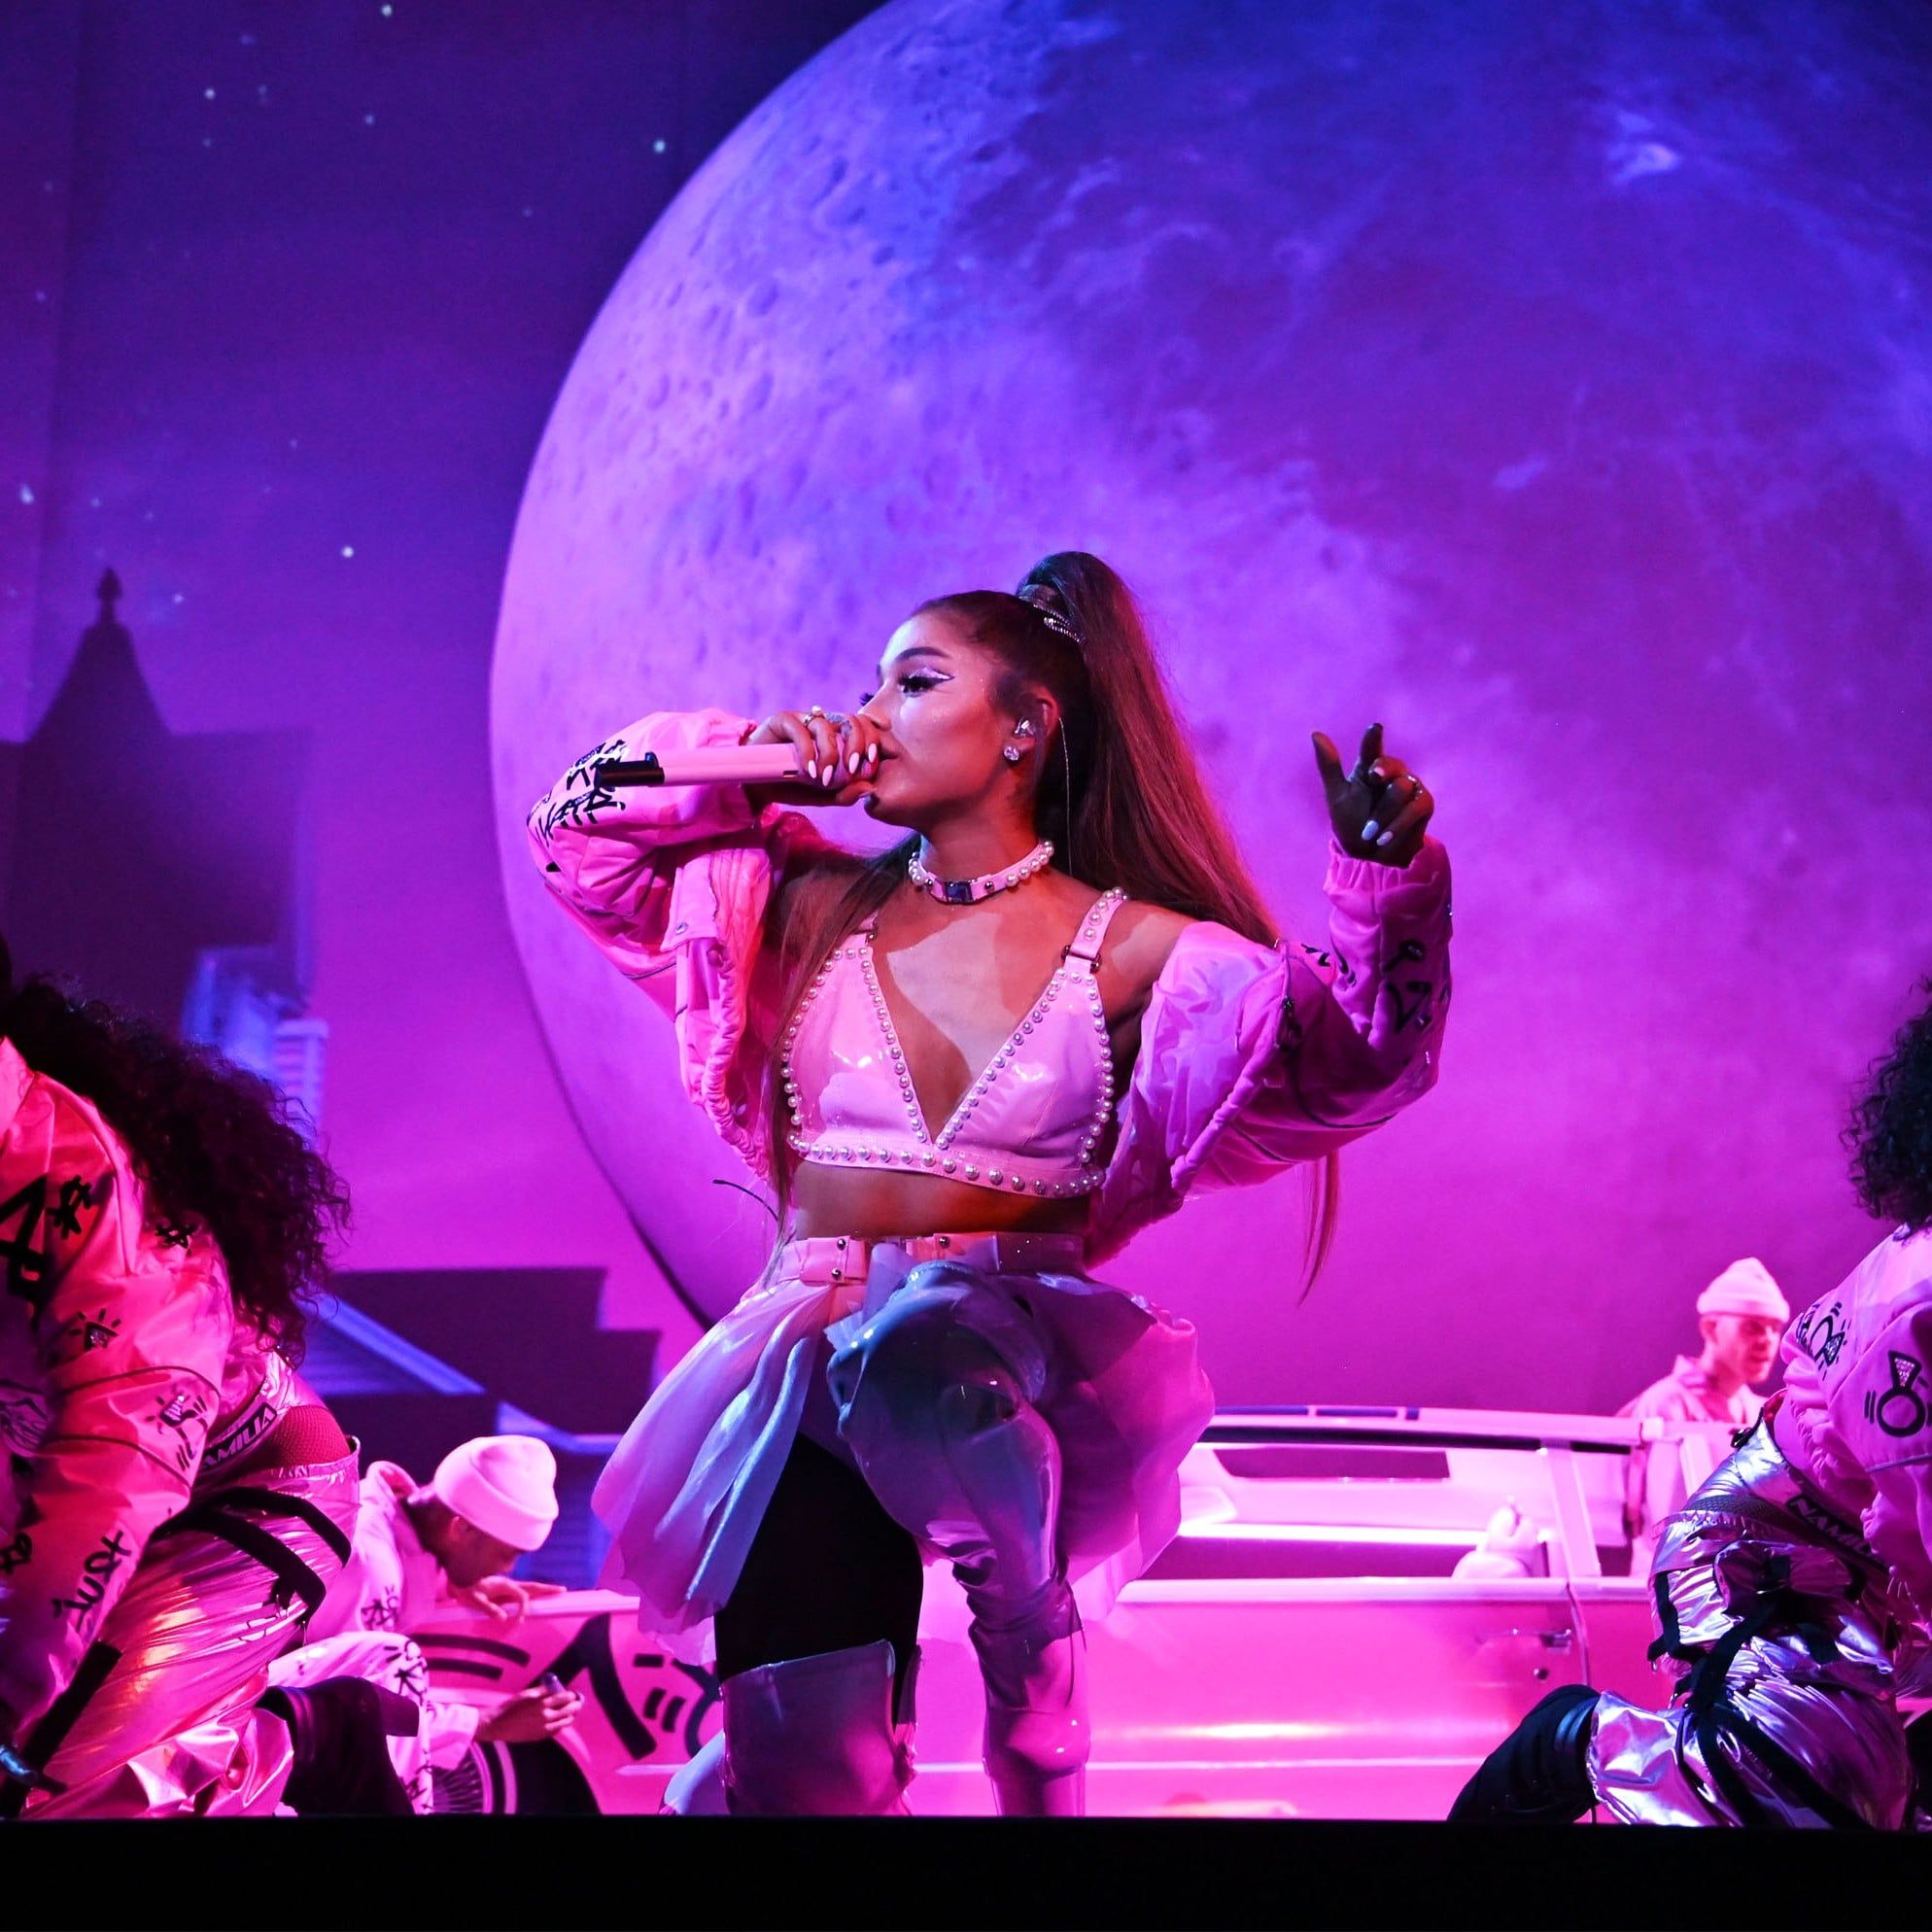 Ariana Grande Concert Wallpaper Free Ariana Grande Concert Background